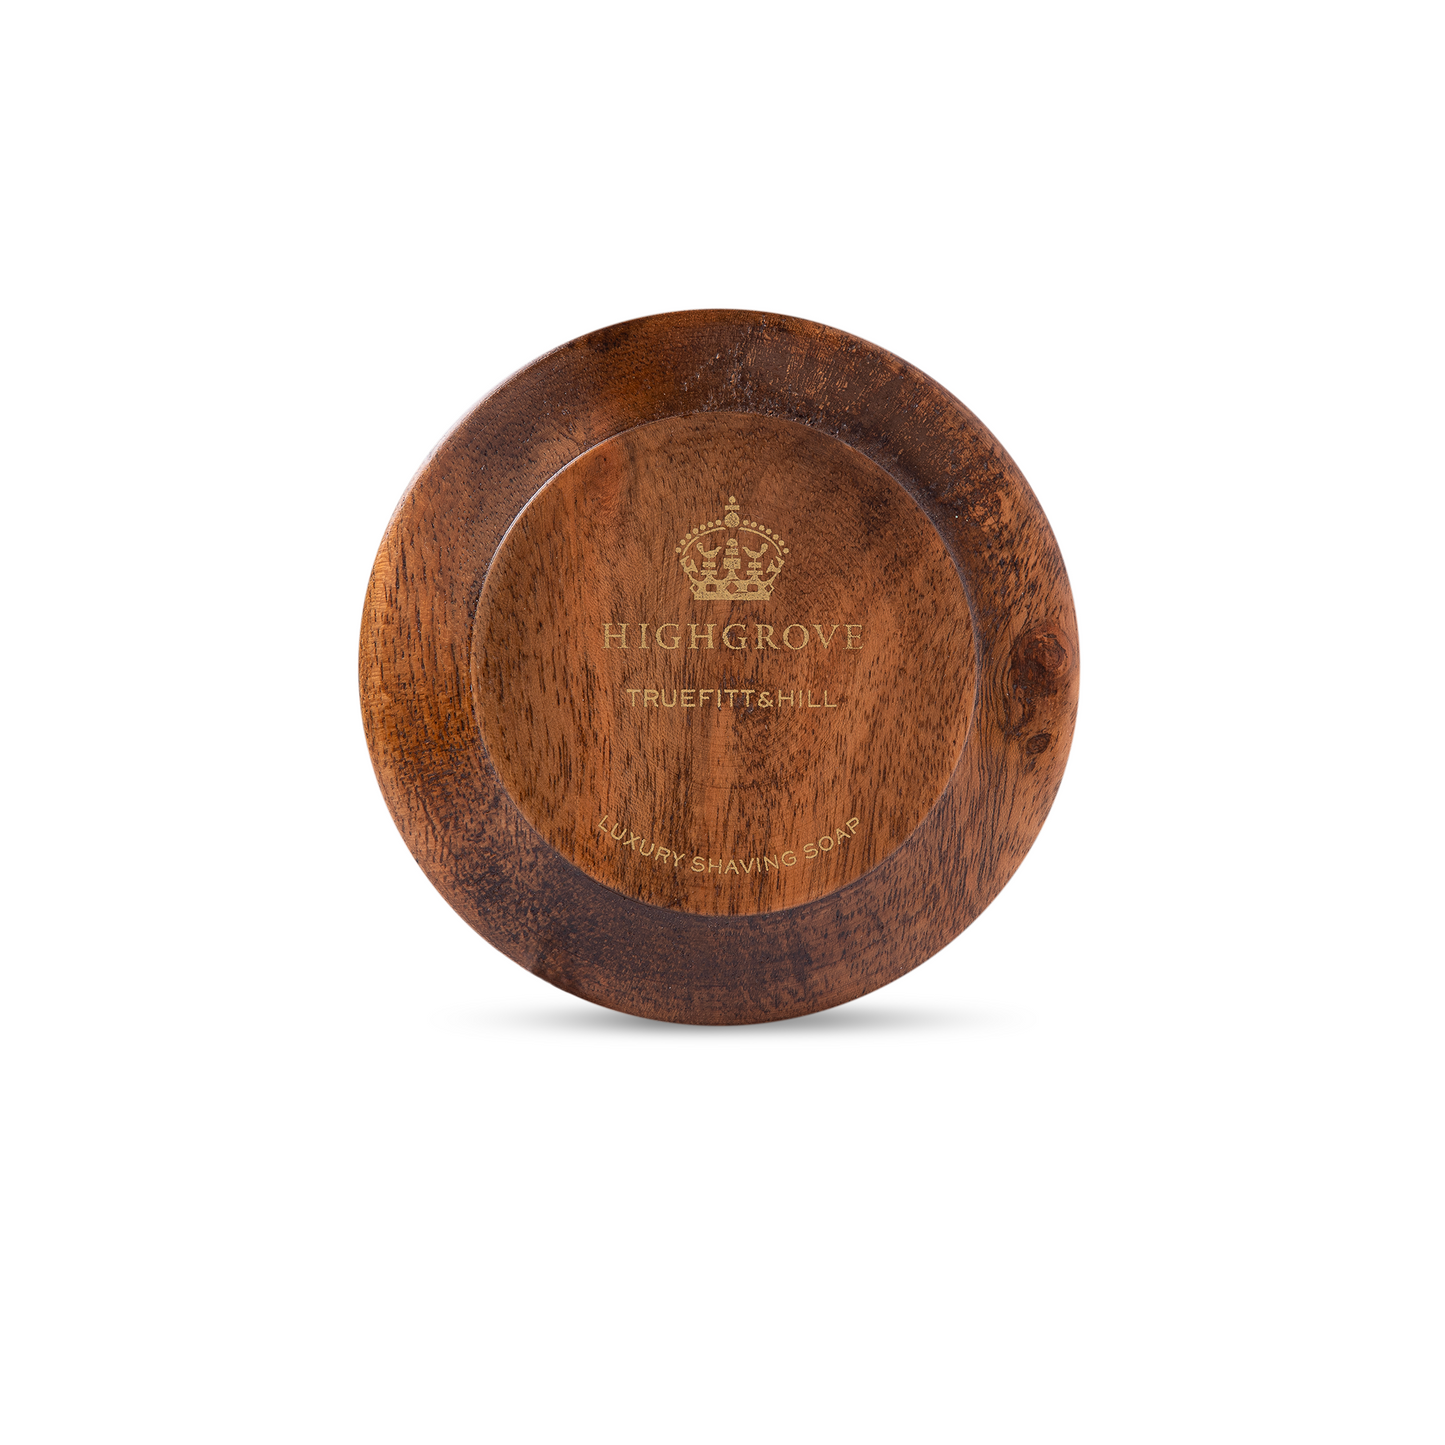 Highgrove Luxury Shaving Soap in Wooden Bowl